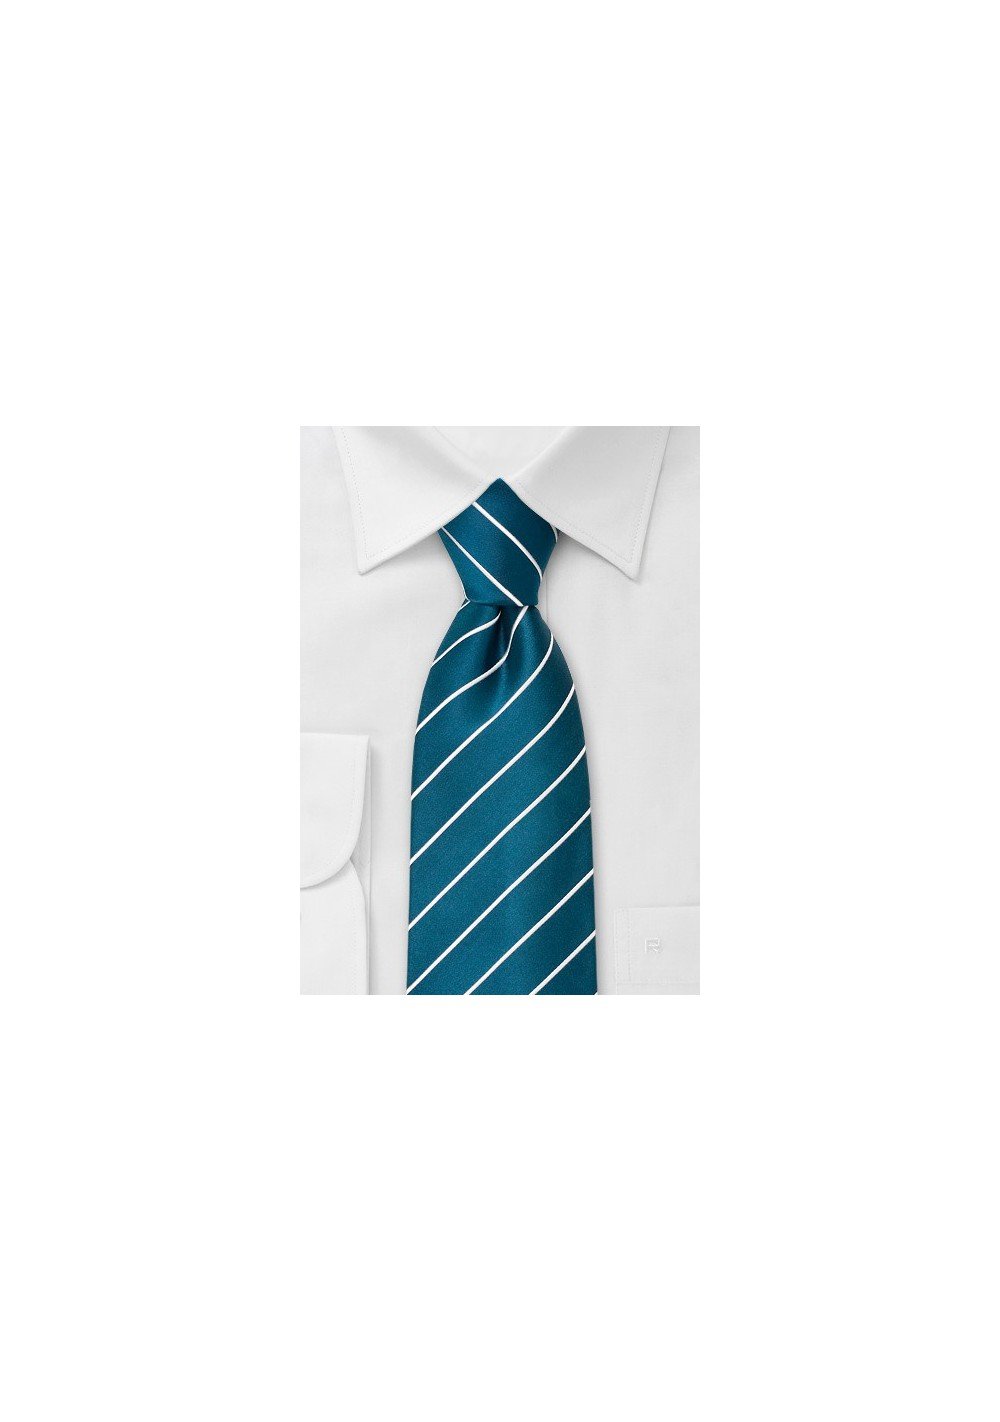 Striped men's ties - Turquoise blue necktie